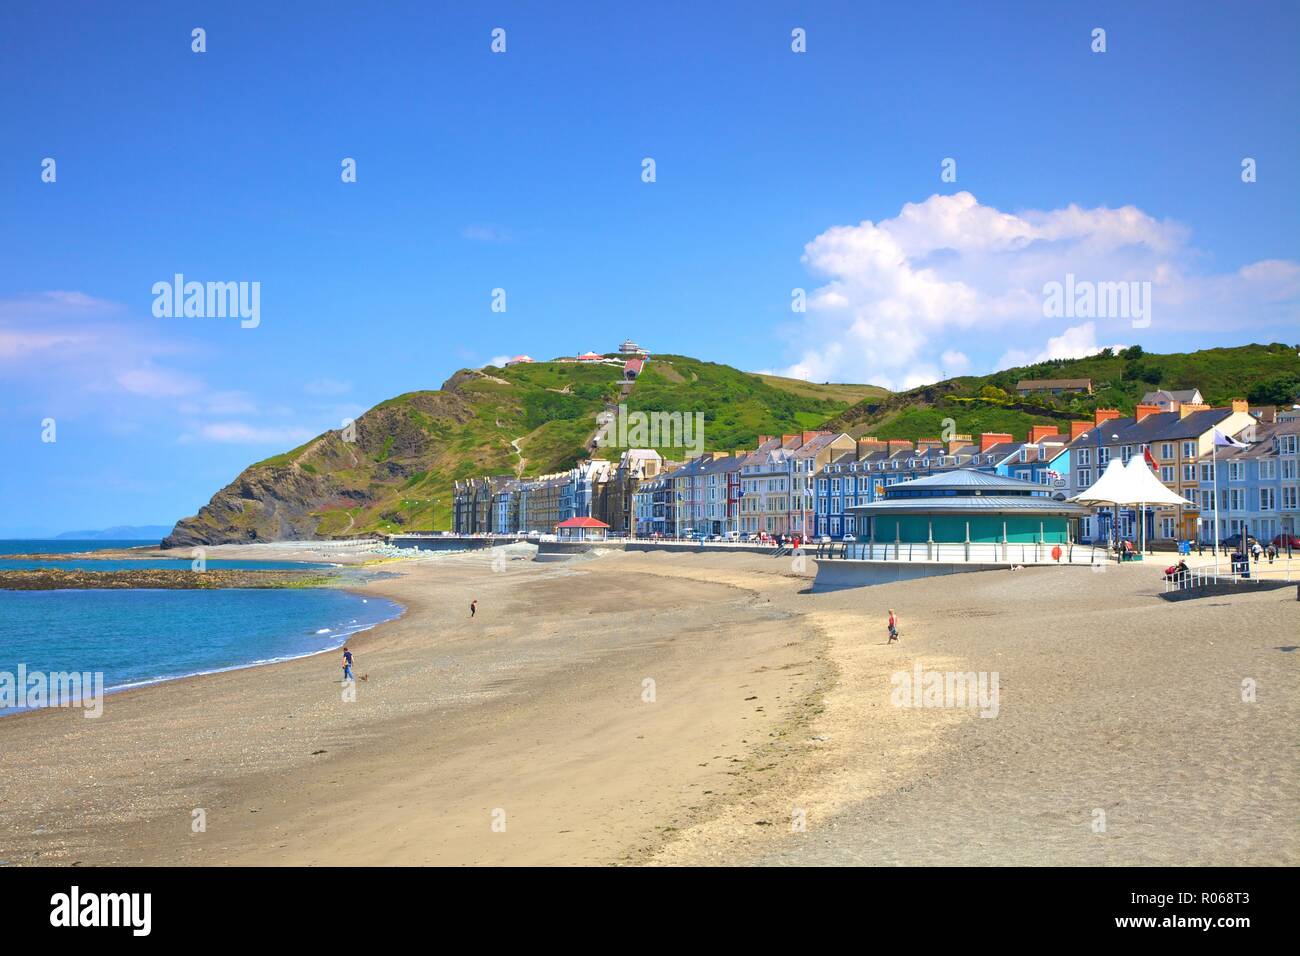 The Beach and Promenade at Aberystwyth, Cardigan Bay, Wales, United Kingdom, Europe Stock Photo